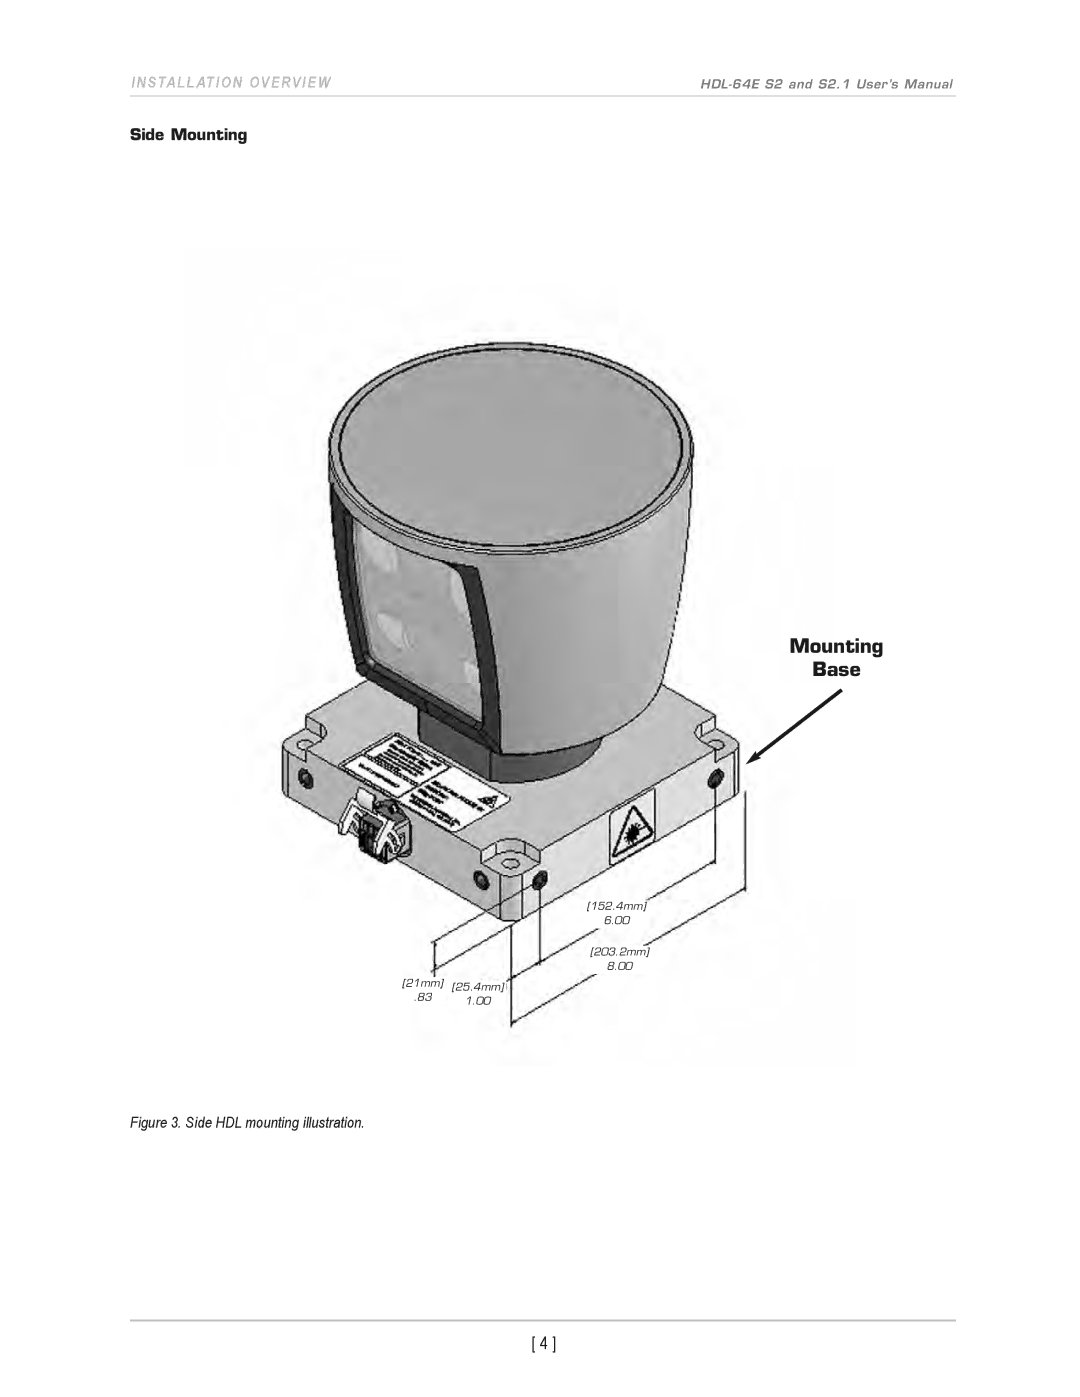 Velodyne Acoustics HDL-64E S2.1 user manual Side Mounting, Side HDL mounting illustration 